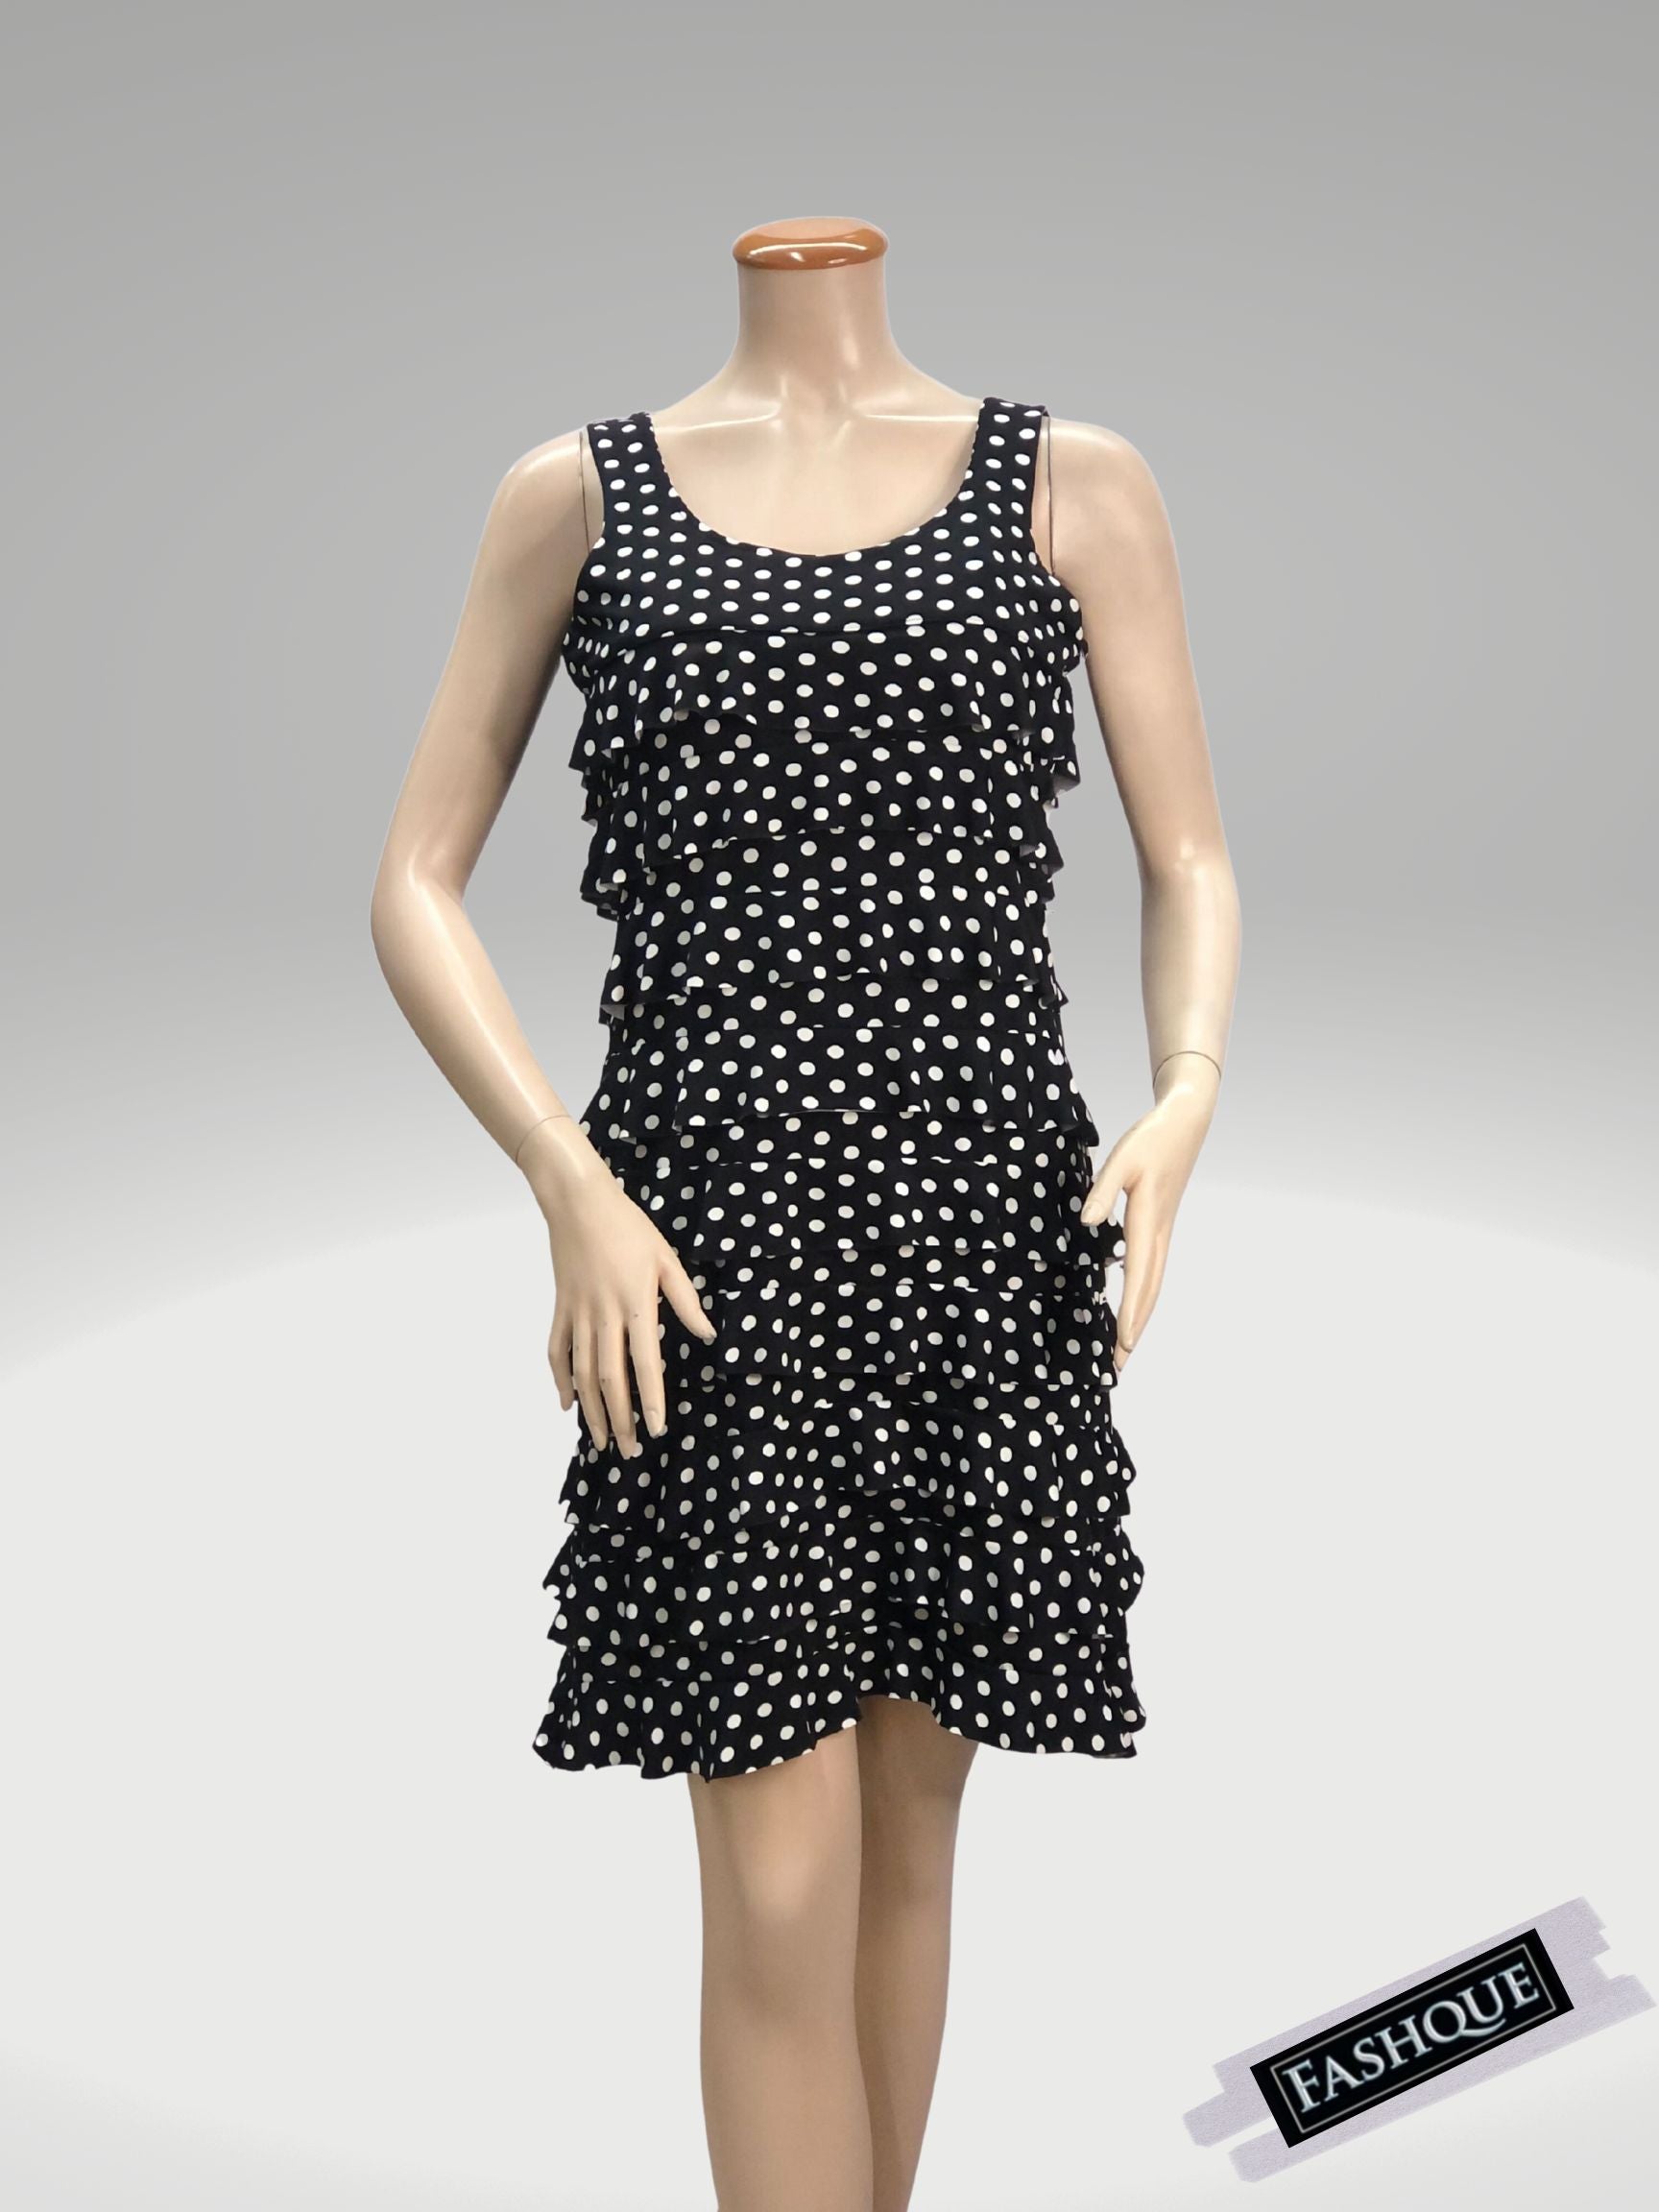 FASHQUE - CHACHA Ruffle Dress Sleeveless Knee length - SALE - D760